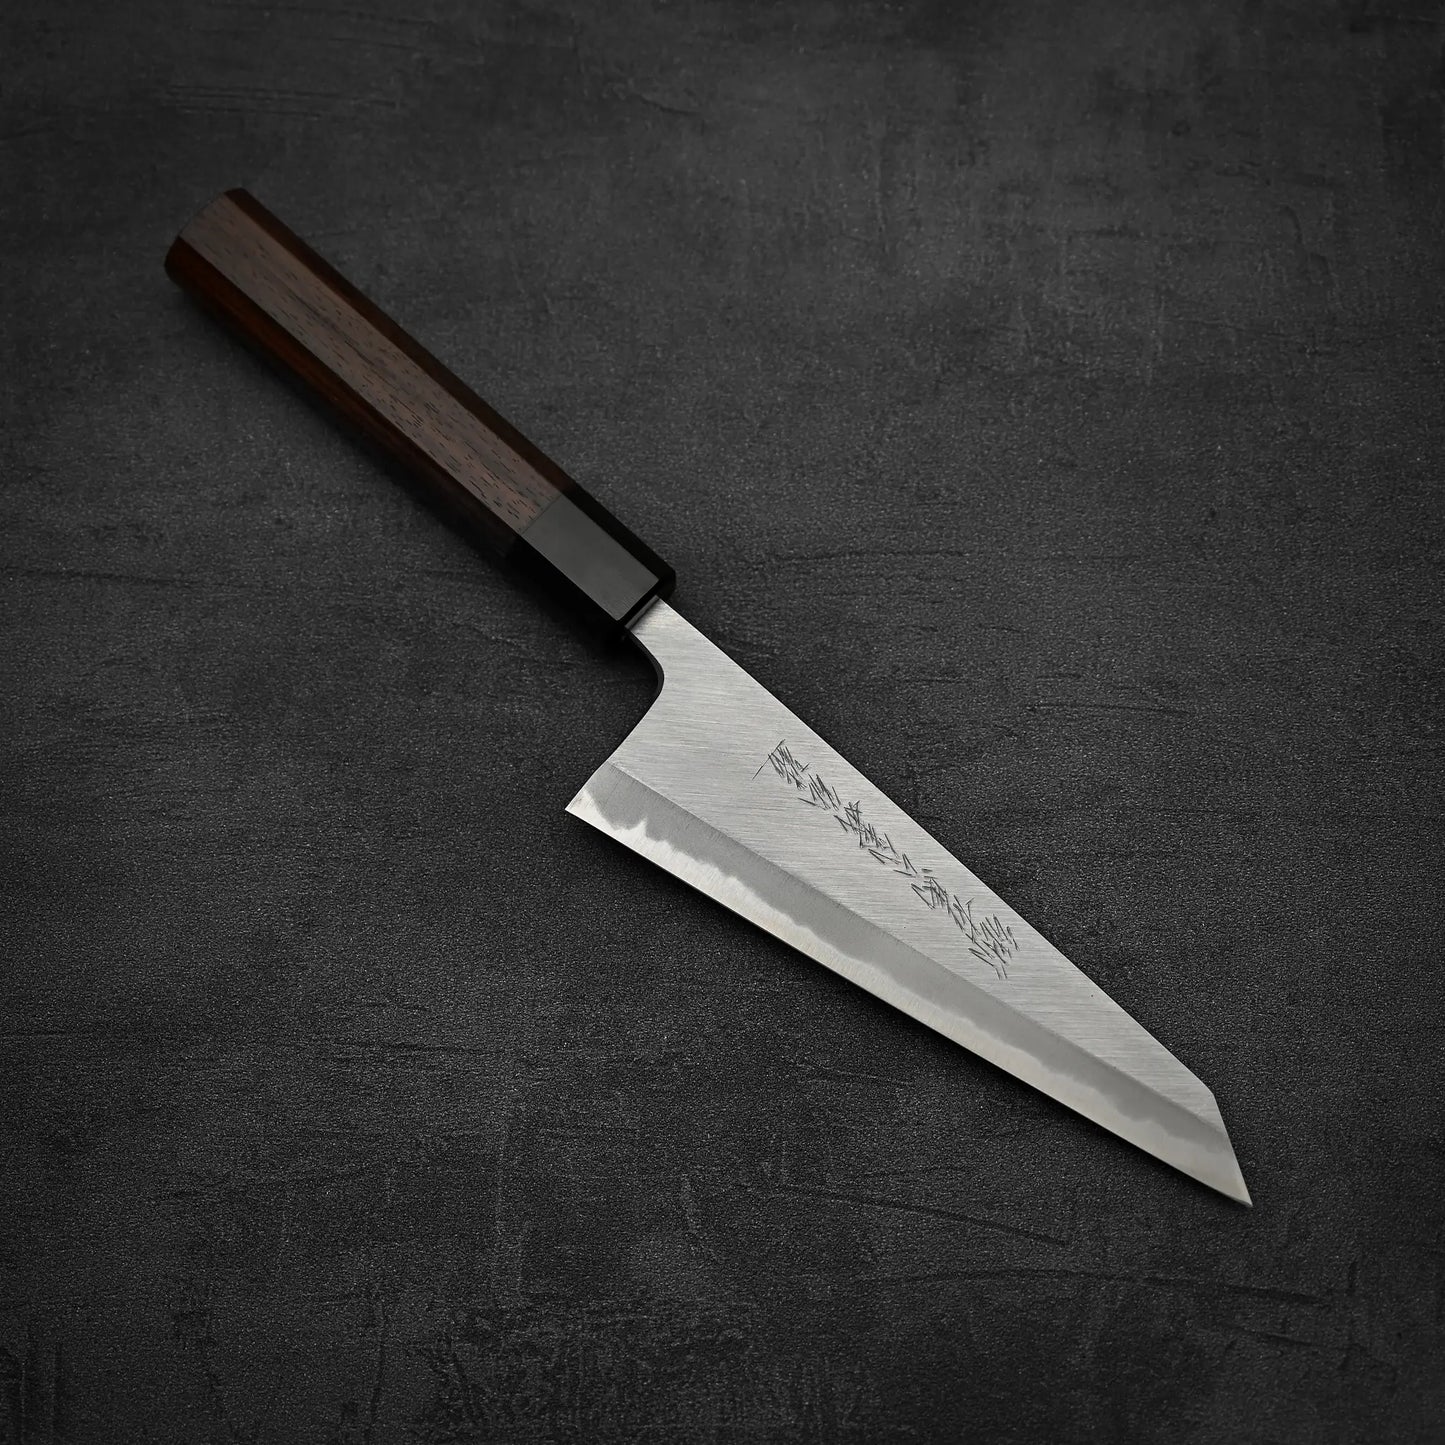 Top down view of Yoshikazu Tanaka shirogami#1 double bevel honesuki knife in diagonal position